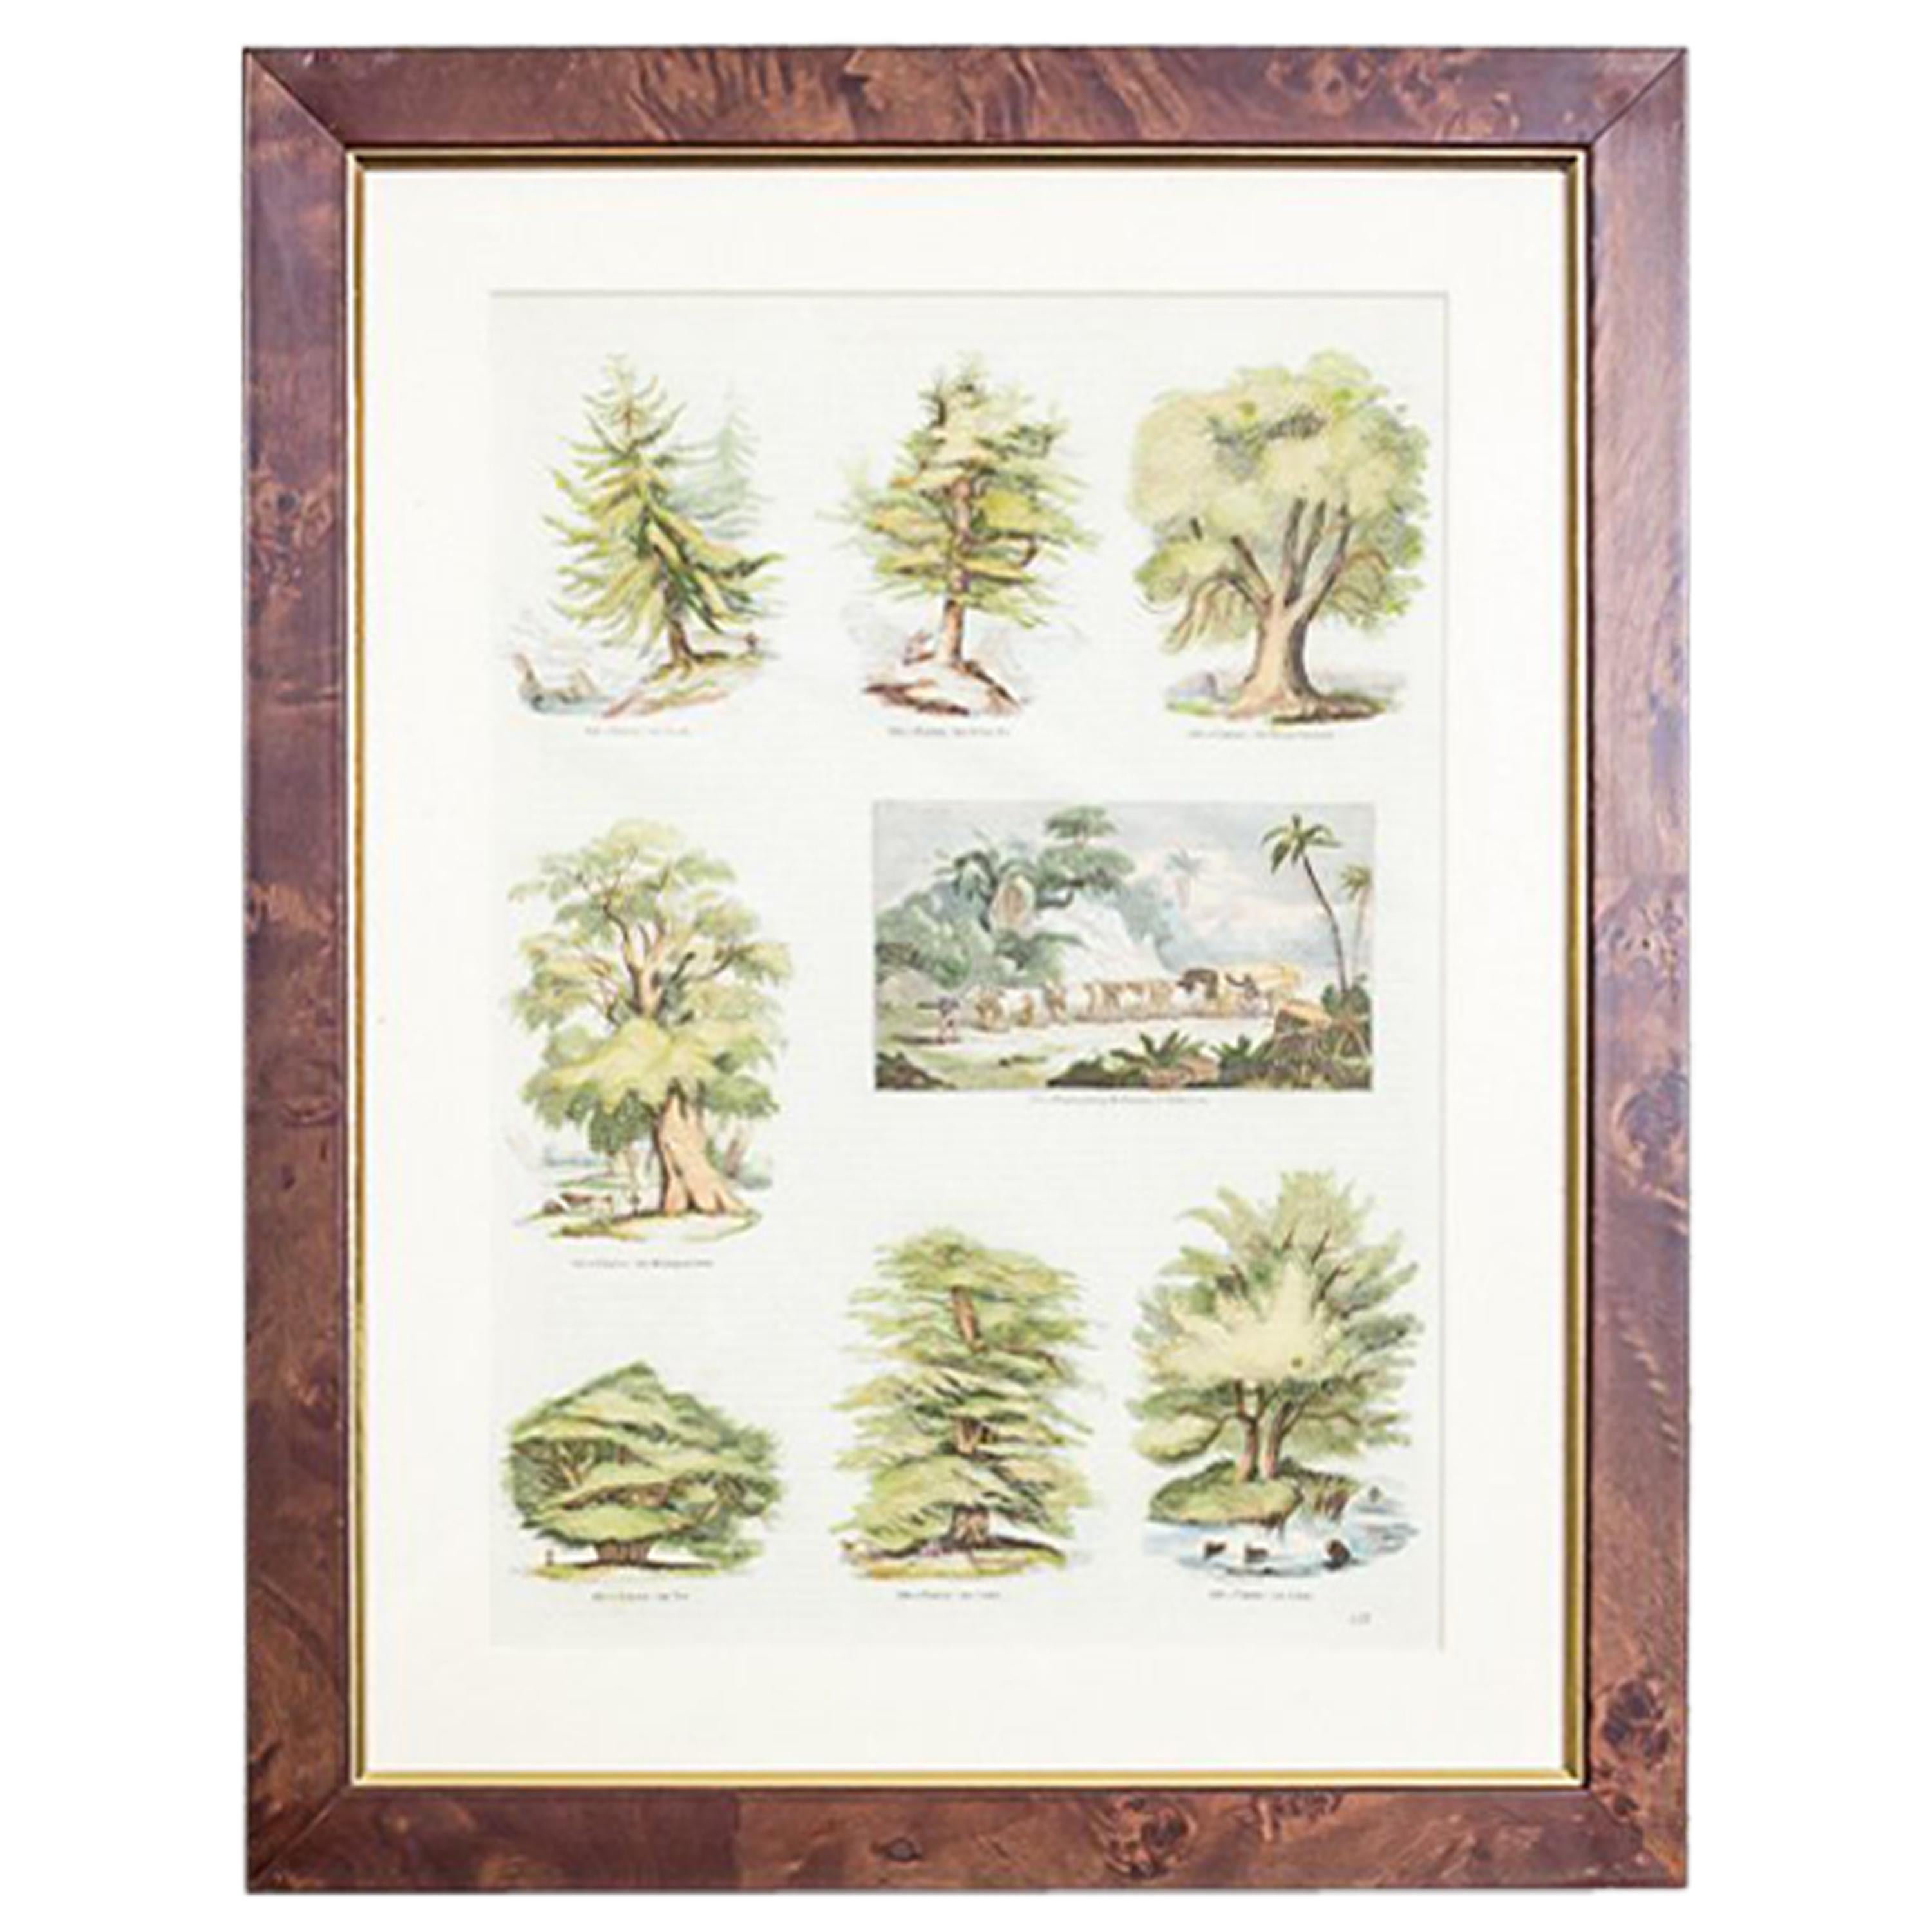 Vintage Print Illustration of Various Types of Trees, framed